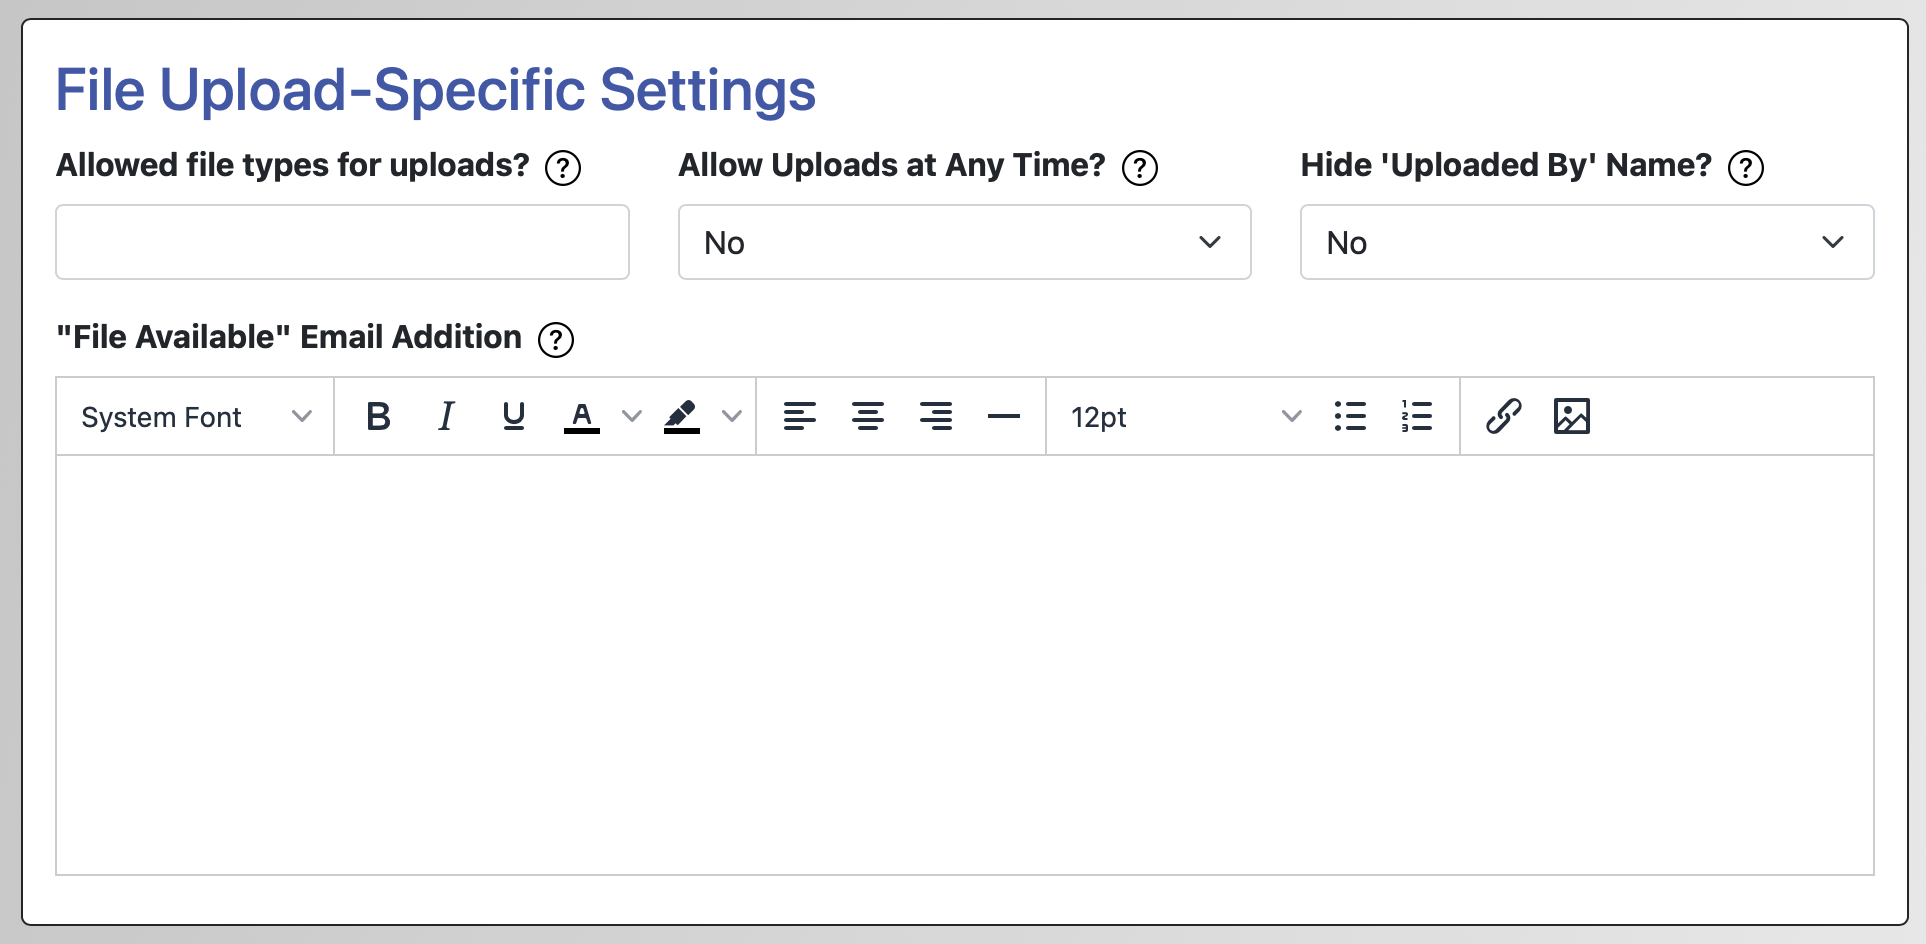 File Upload-Specific Settings